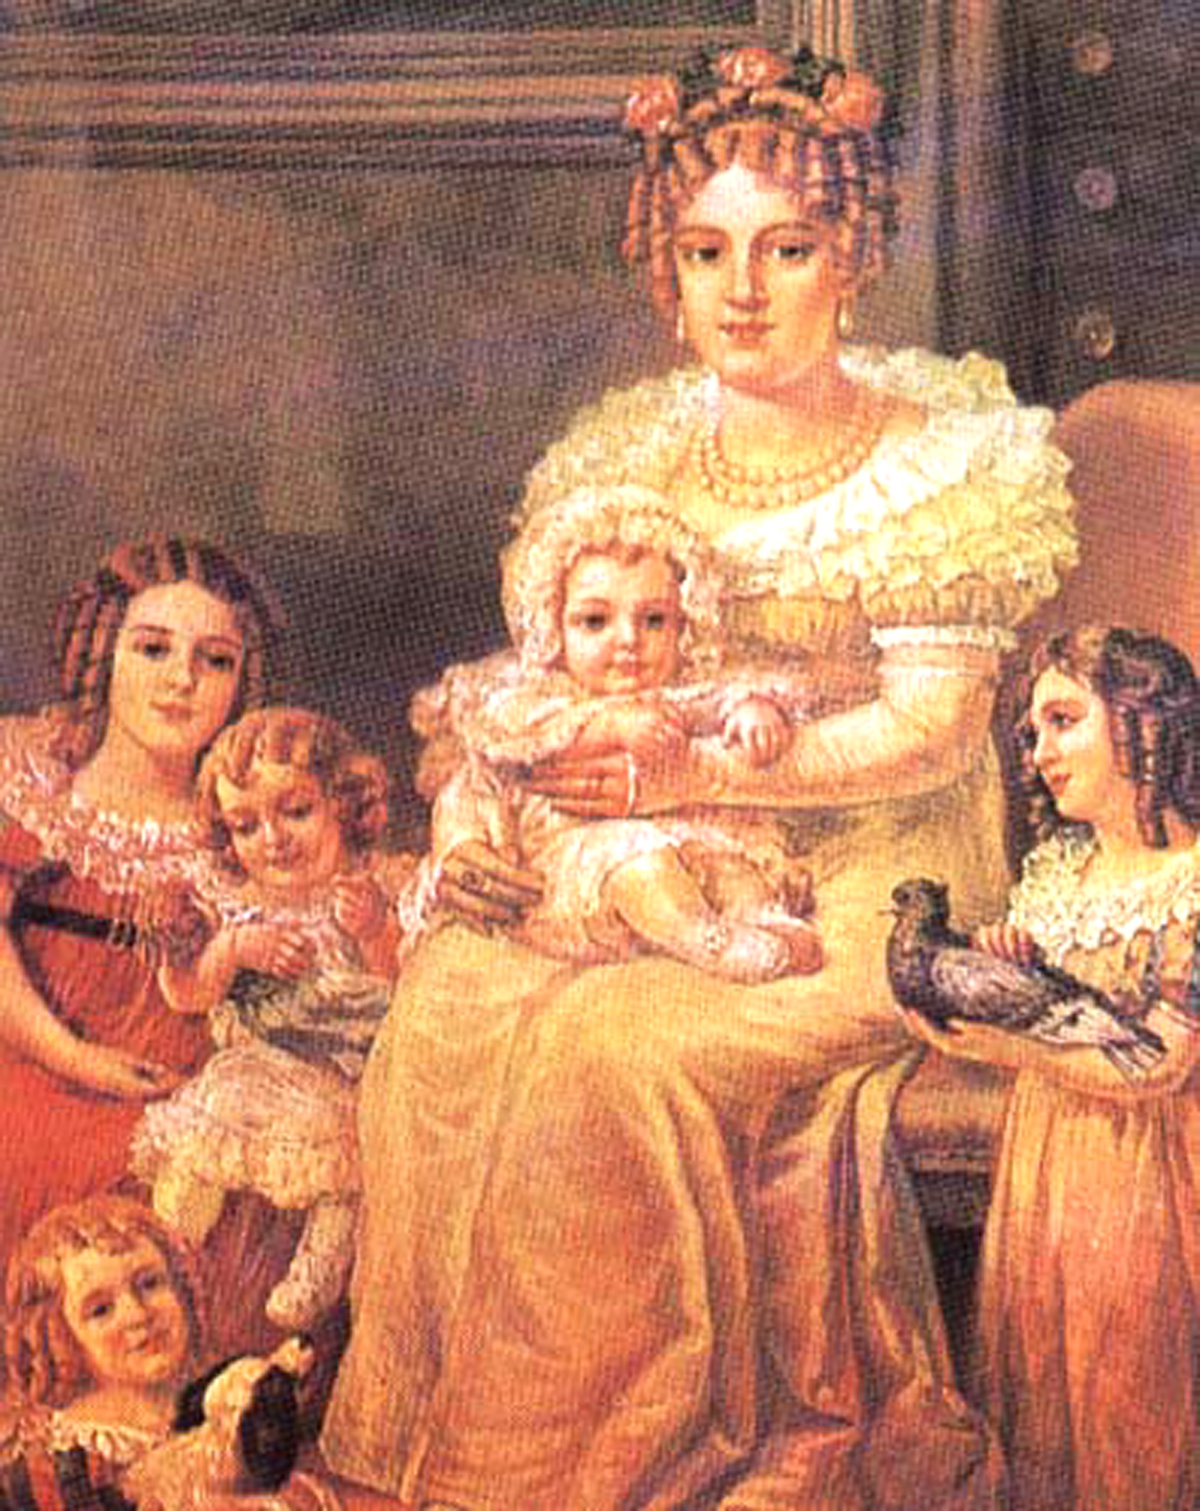 Imperatriz Leopoldina com os filhos <a style='float:right;color:#ccc' href='https://www3.al.sp.gov.br/repositorio/noticia/03-2008/leopoldina.jpg' target=_blank><i class='bi bi-zoom-in'></i> Clique para ver a imagem </a>